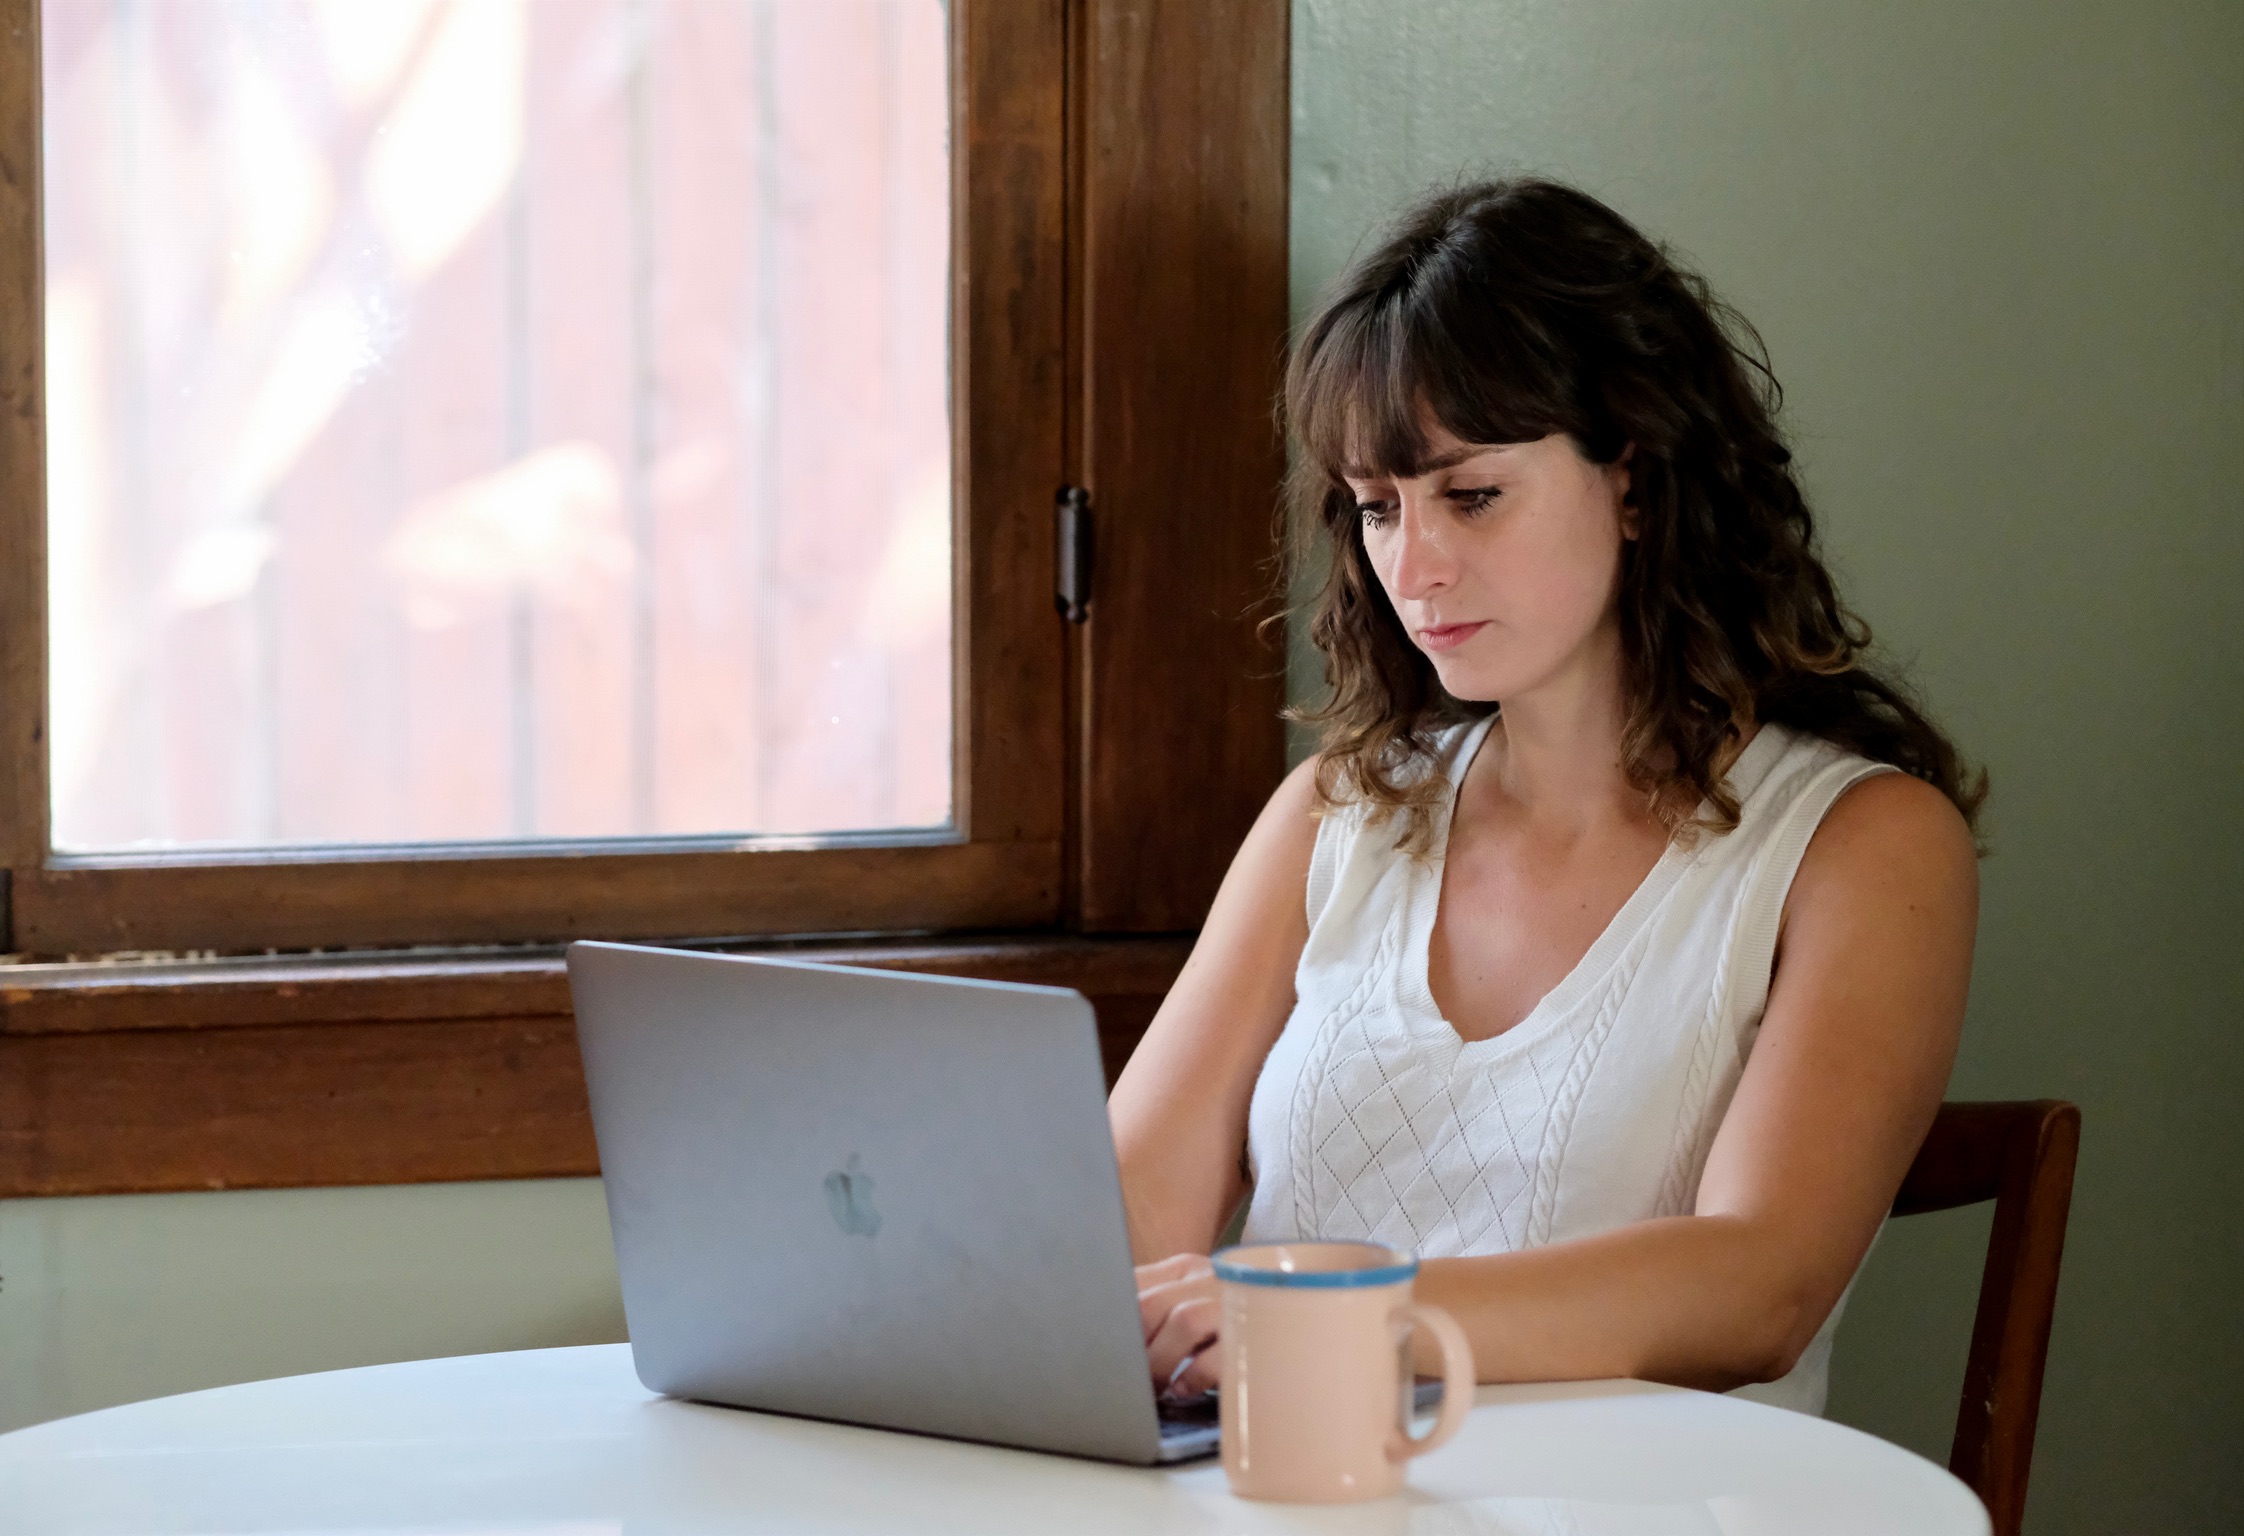 Woman writing on laptop